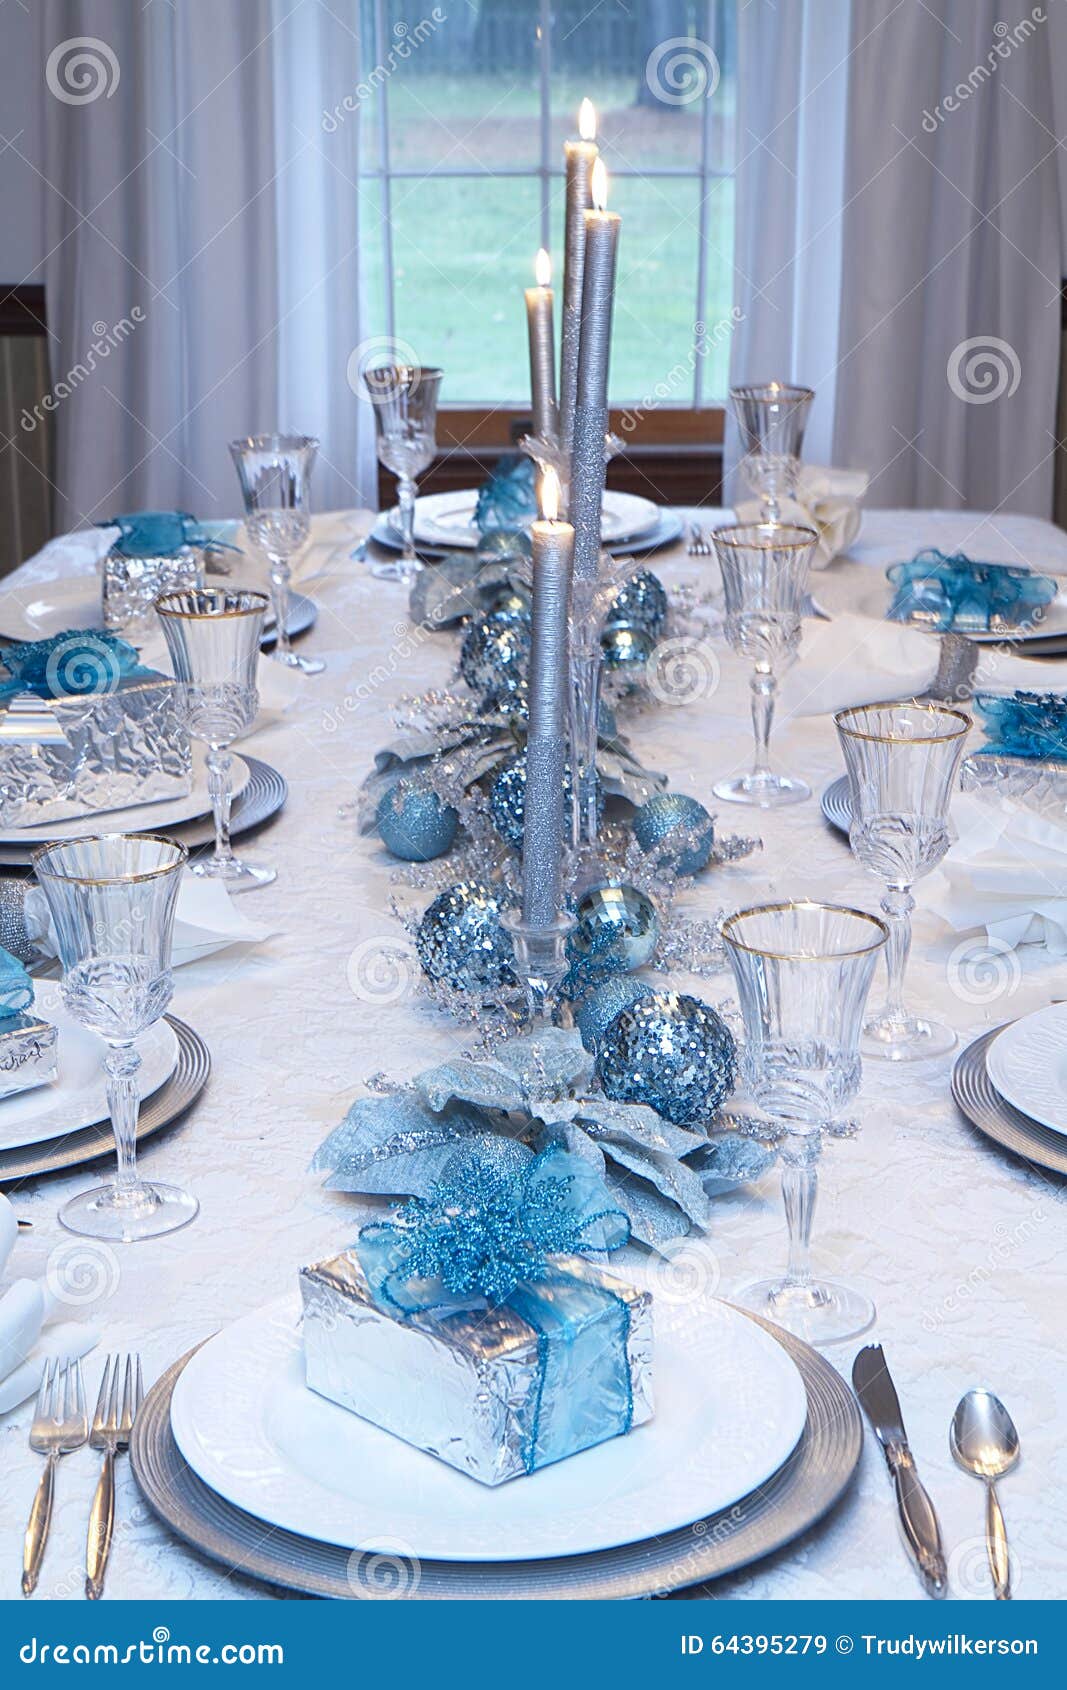 Christmas Holiday Table Setting - Blue White Stock Image 